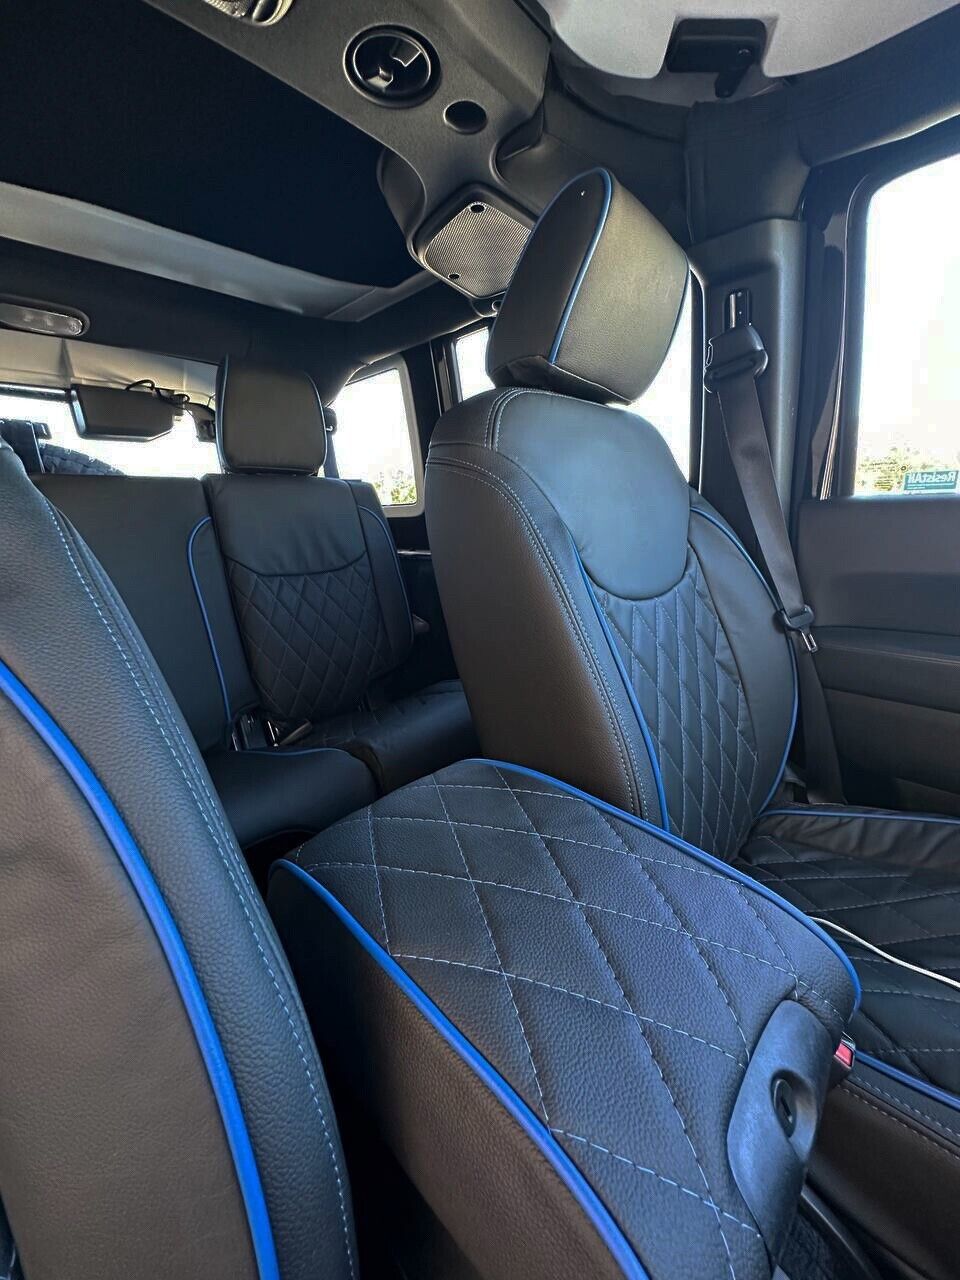 2016-2017 Fits JEEP WRANGLER JK CUSTOM LEATHER SEAT COVERS BLACK & Blu – US  leather car seats